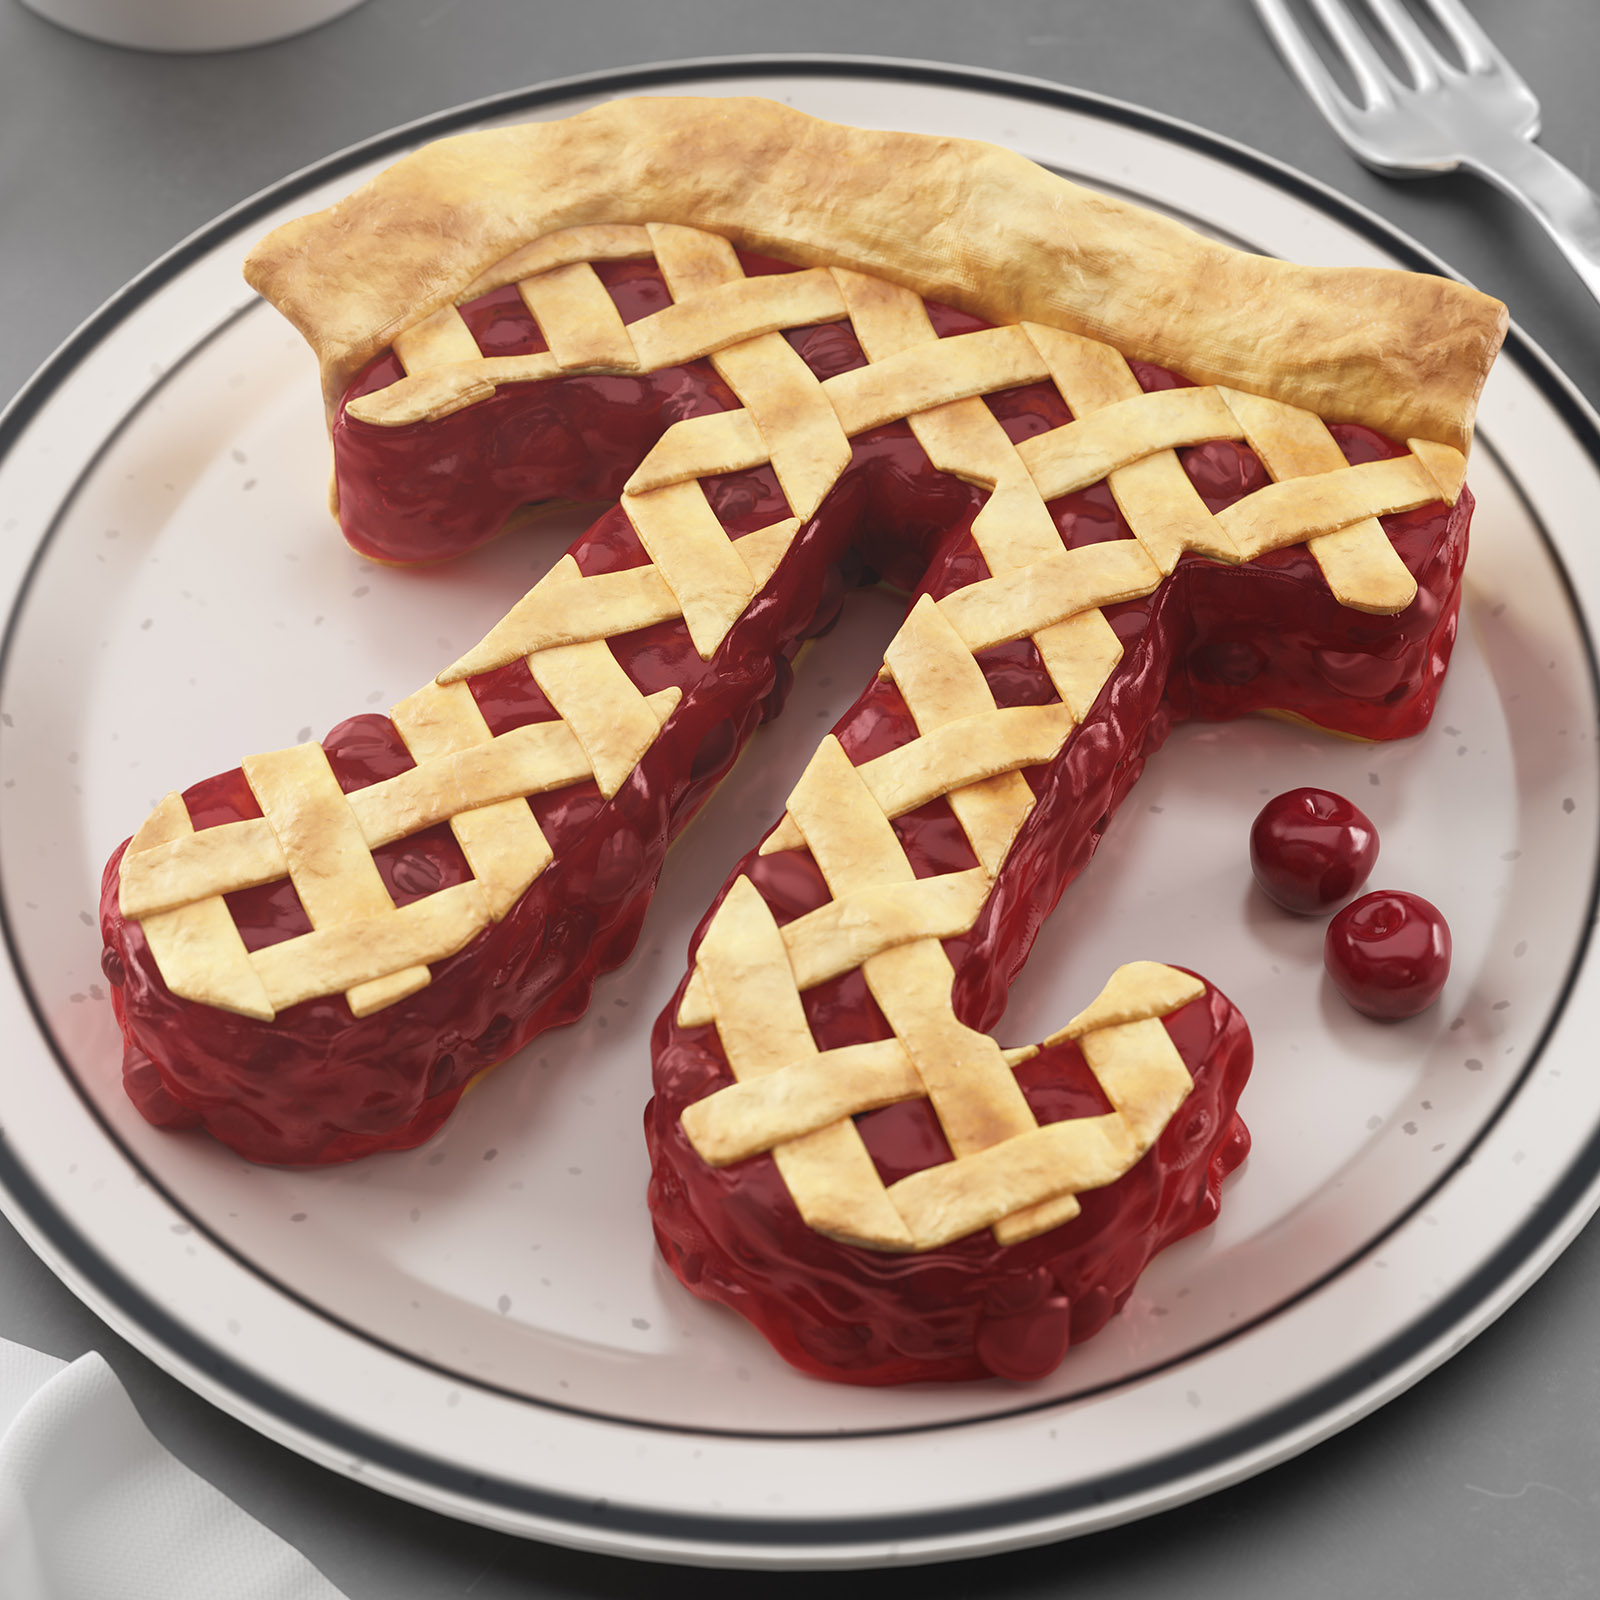 Cherry pie in shape of pi